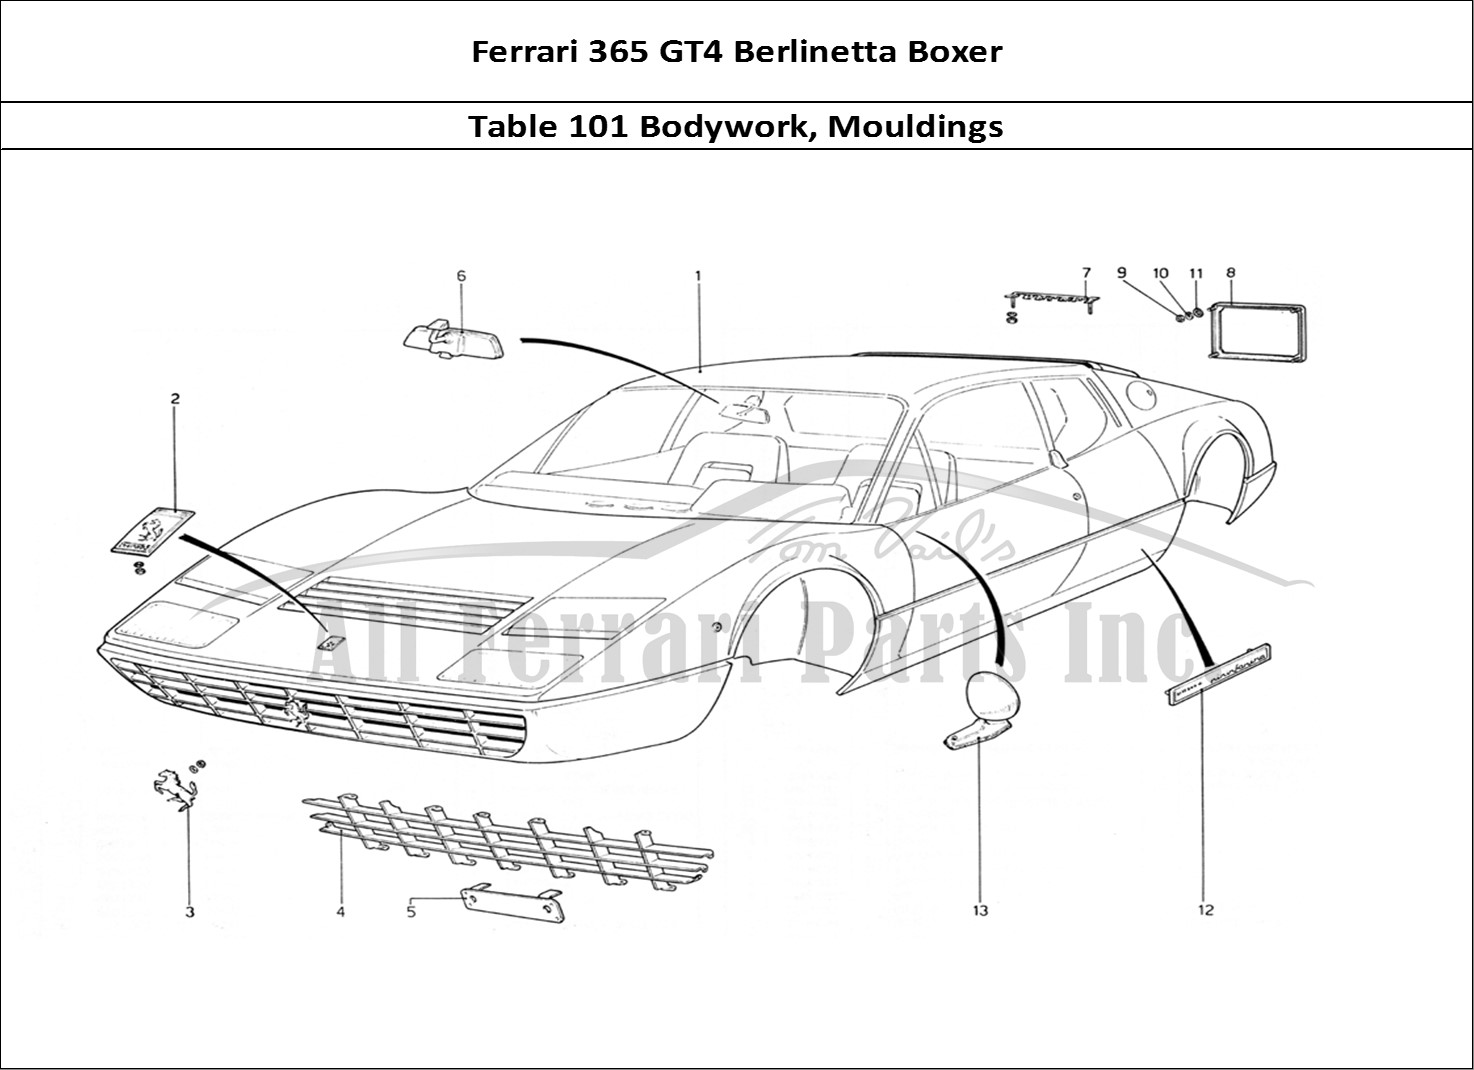 Ferrari Parts Ferrari 365 GT4 Berlinetta Boxer Page 101 Body Shell and Mouldings